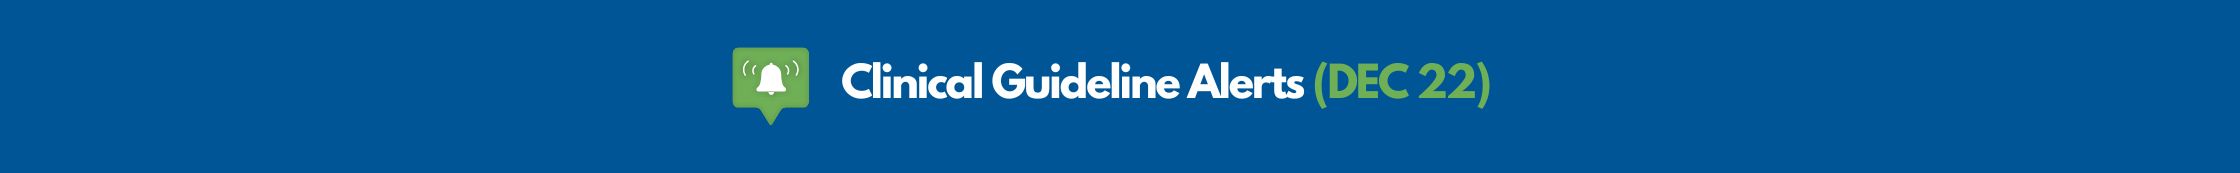 Clinical Guideline Alerts Banner Image